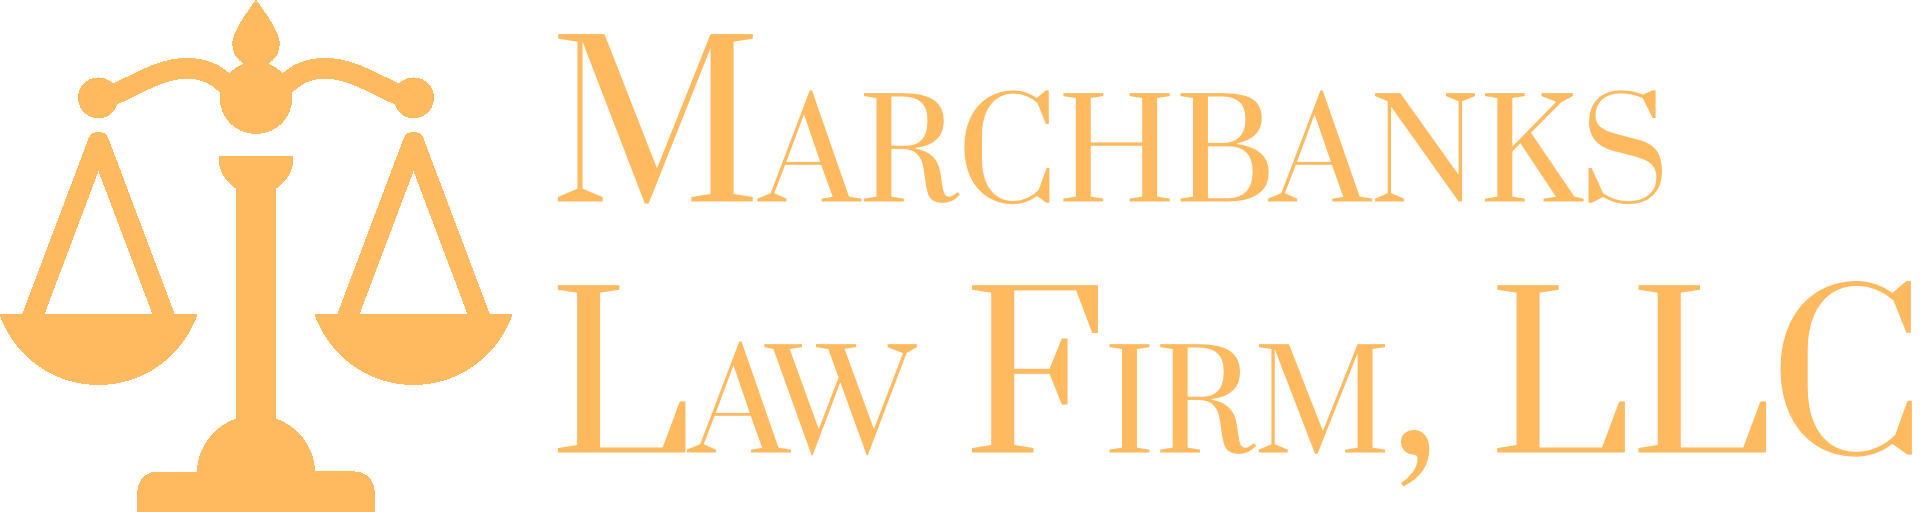 Marchbanks Law Firm, LLC